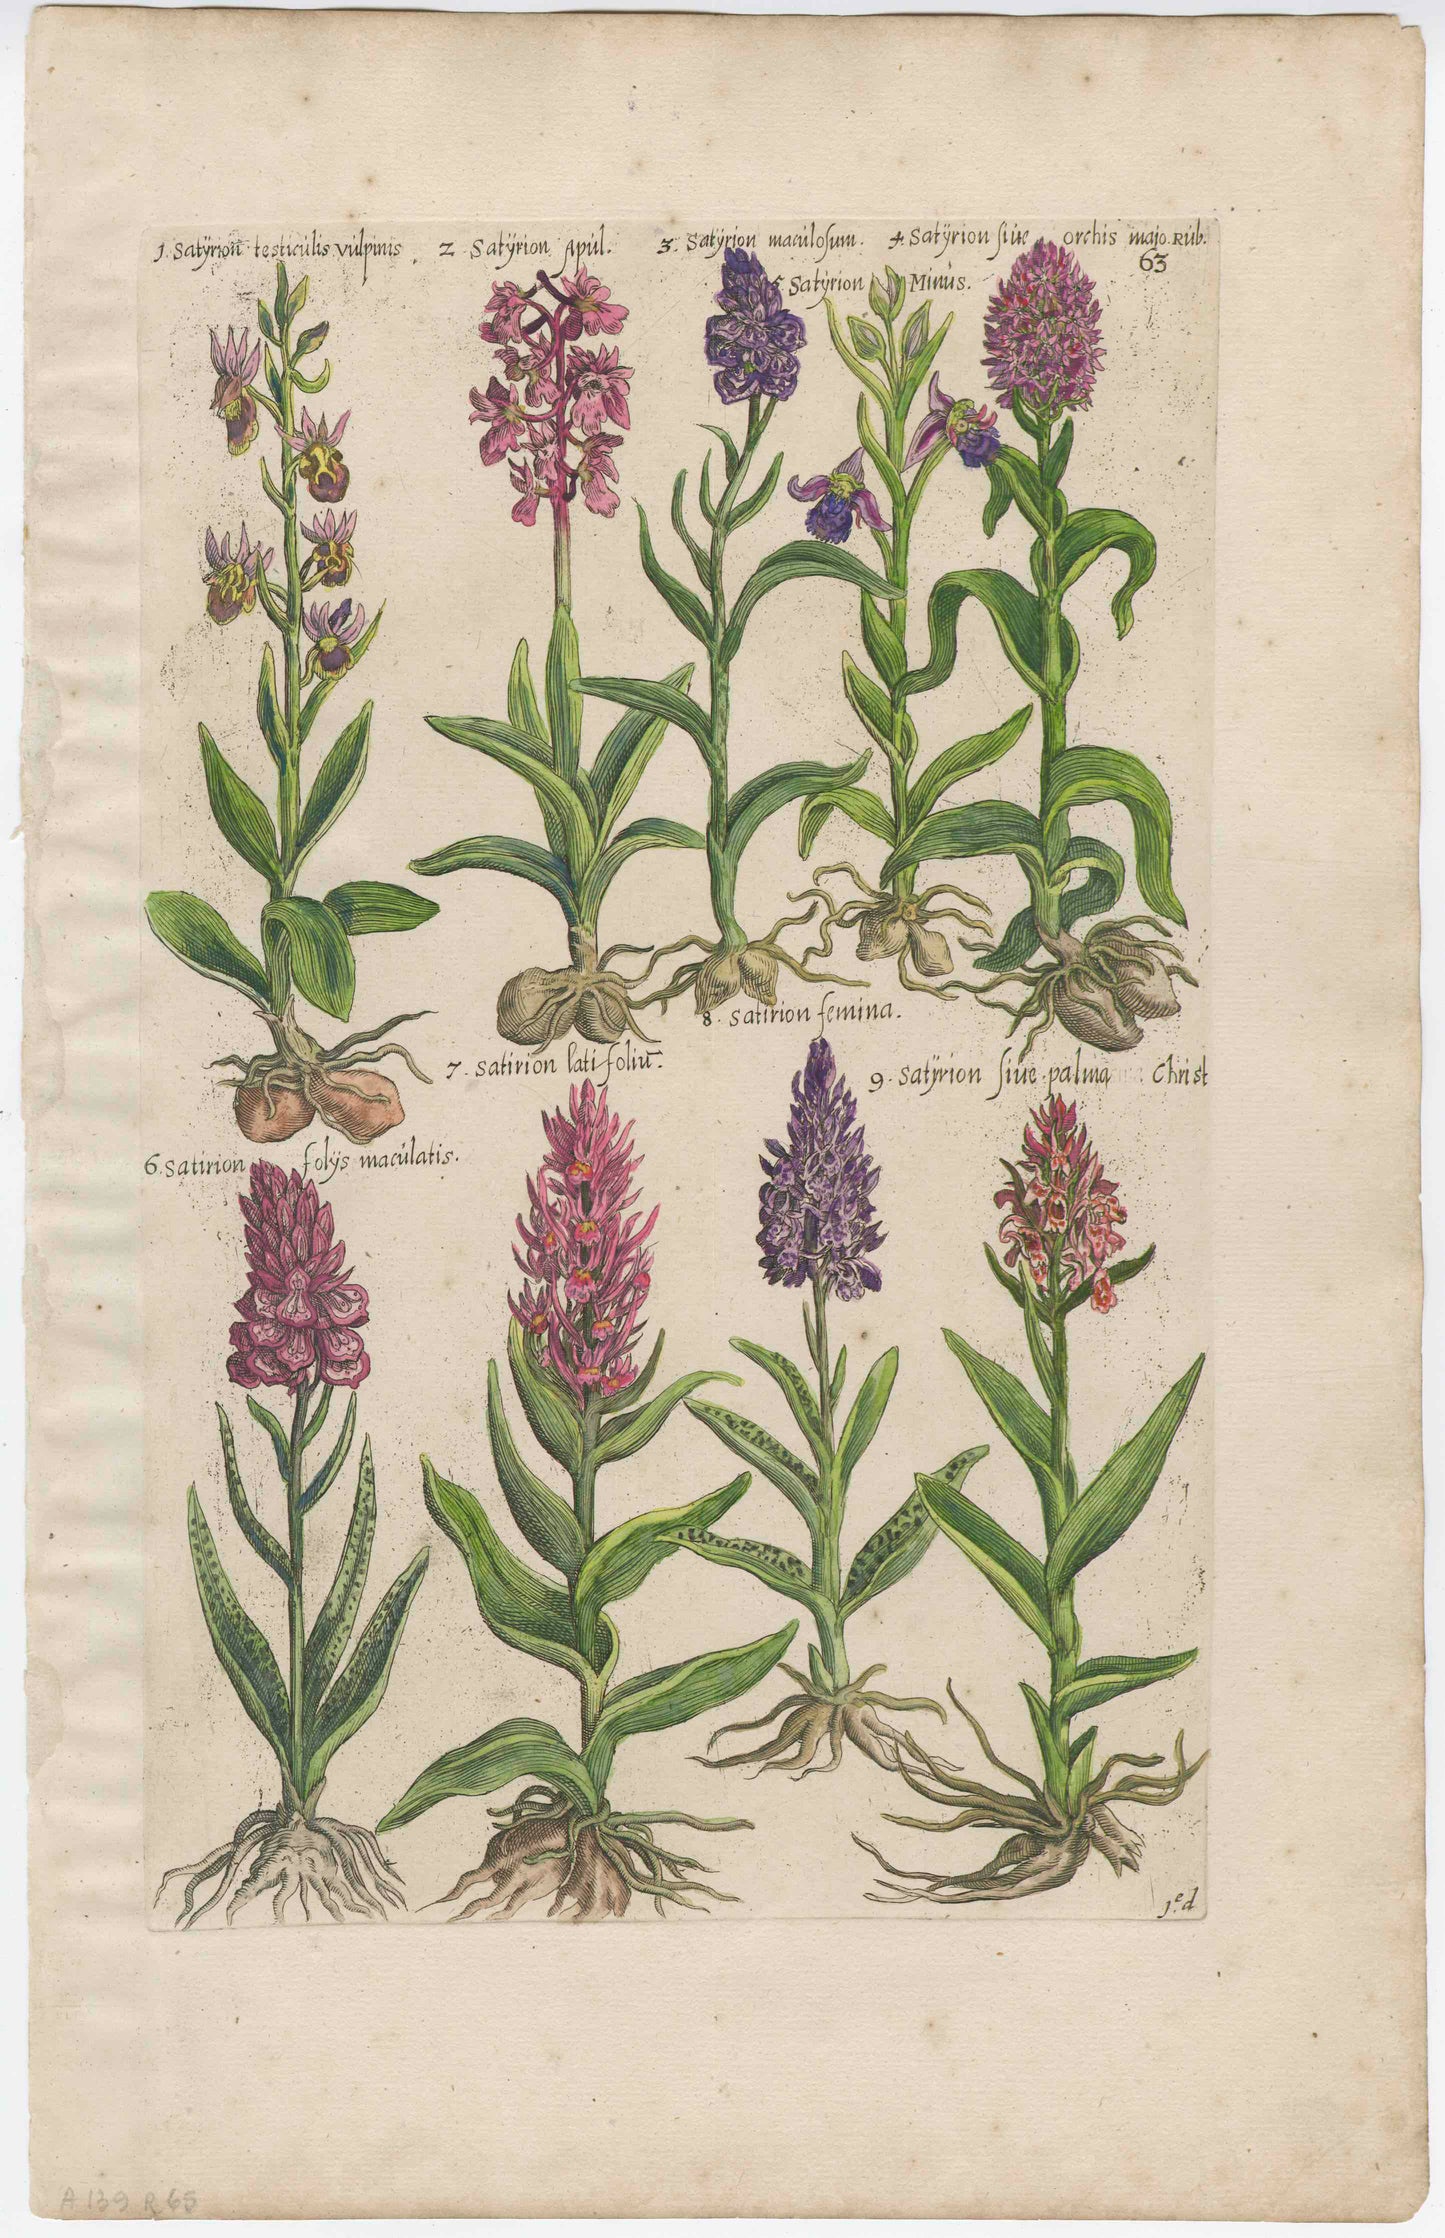 Emanuele Sweerts 17th Century "Florilegium" Print - Plate 63